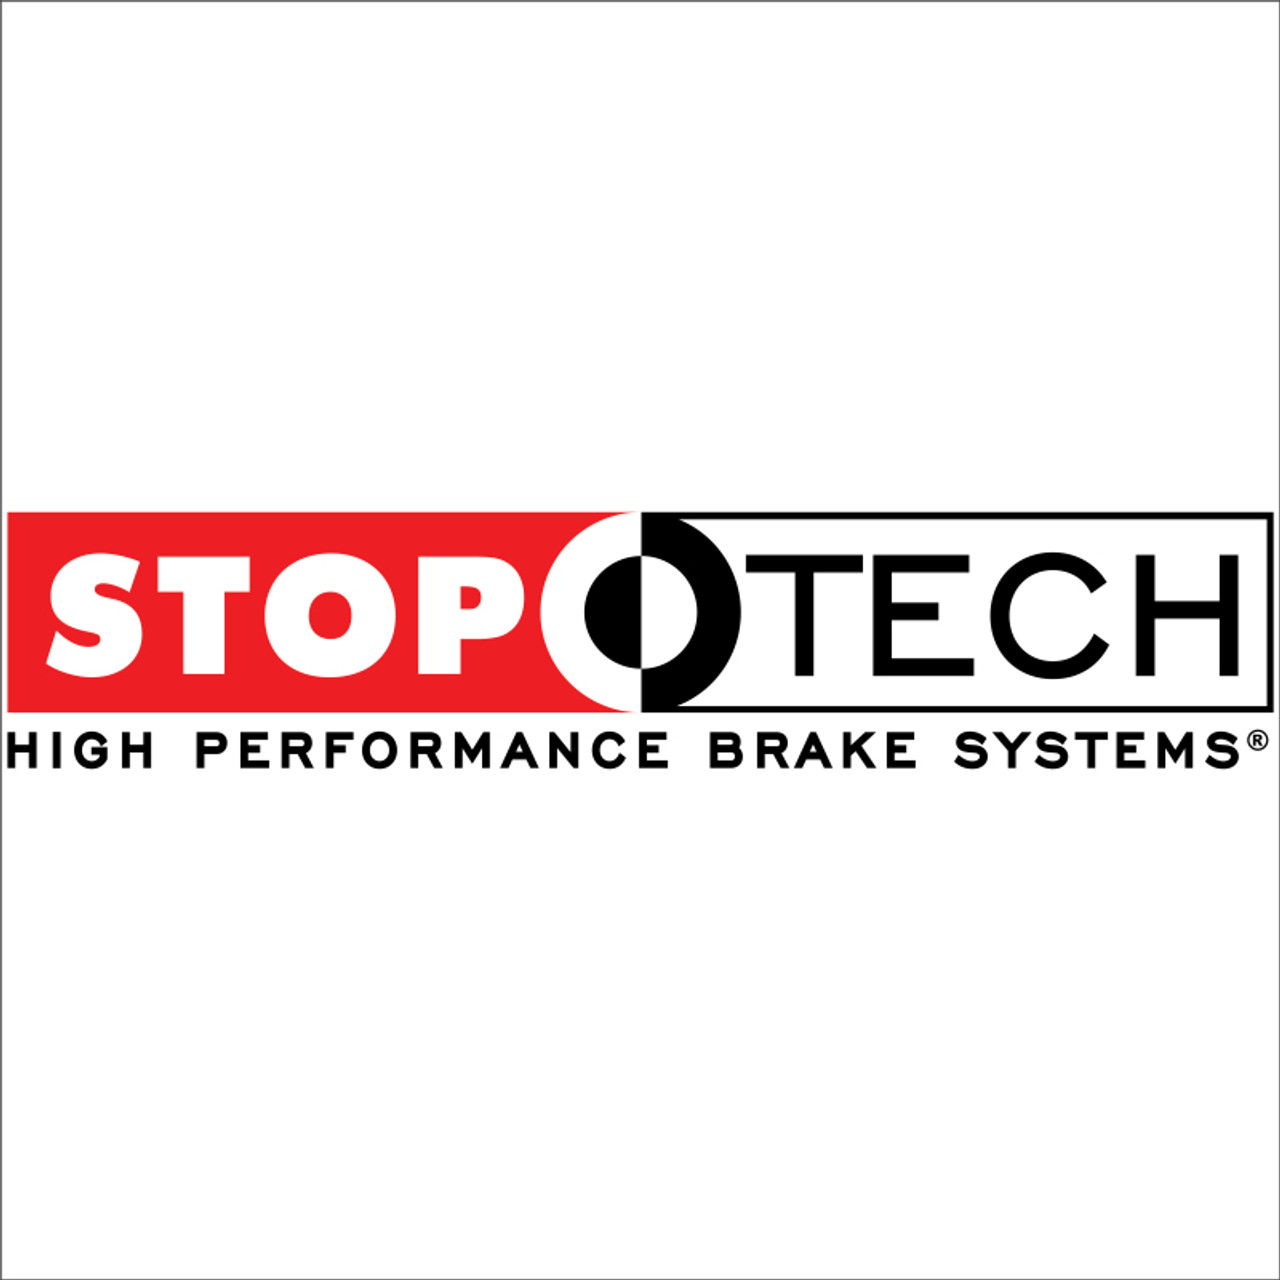 StopTech Logo Image